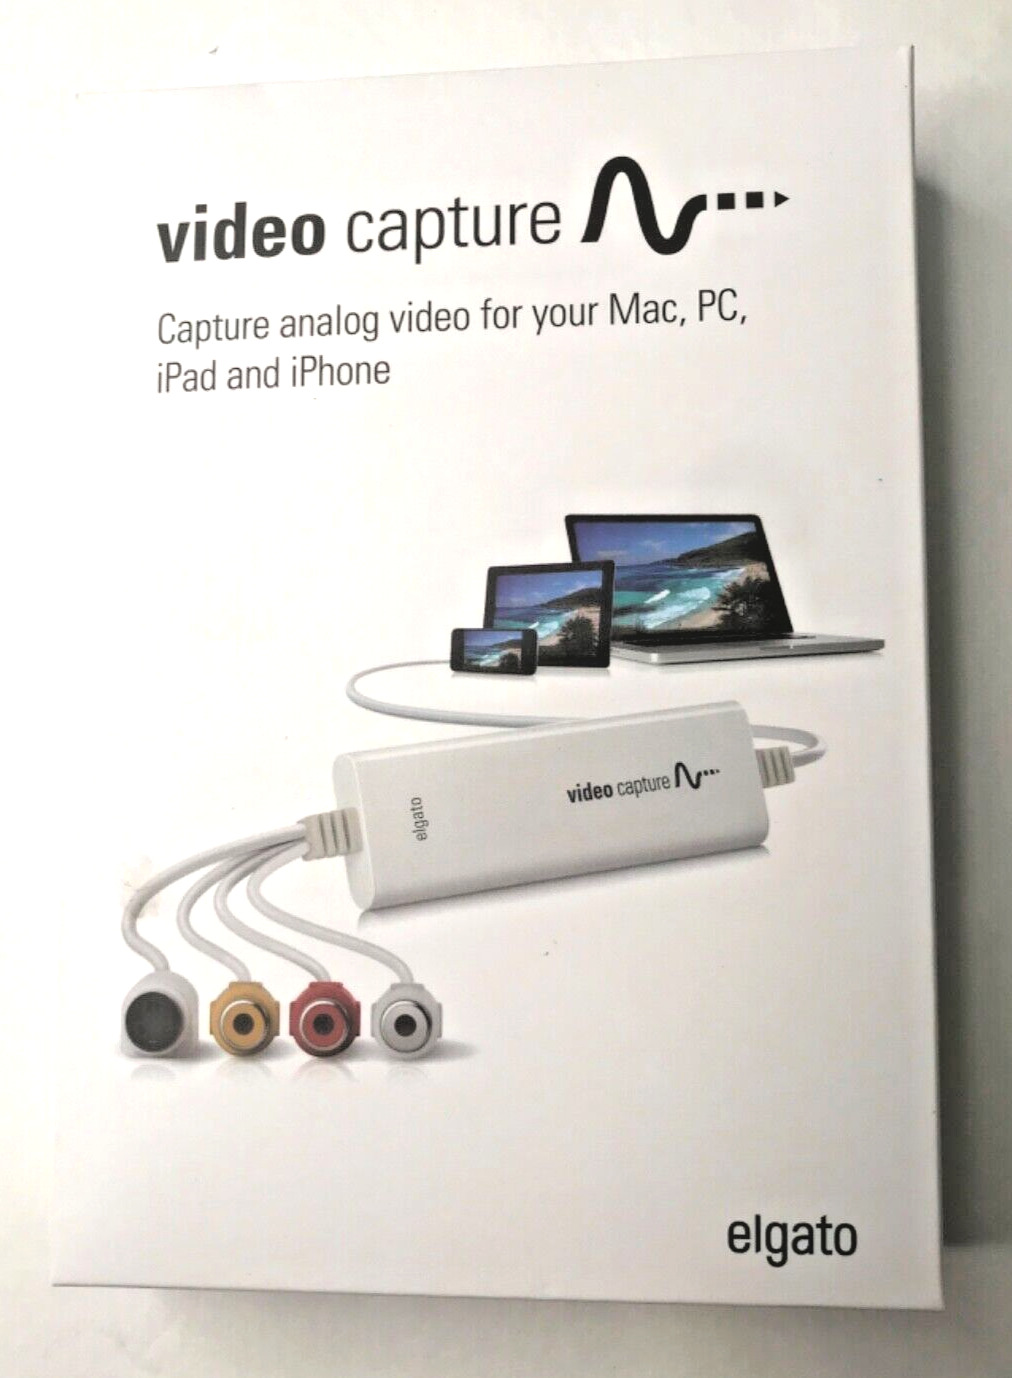 Elgato USB Analog Video Capture Device For Windows, Mac, Retro Games, Streaming